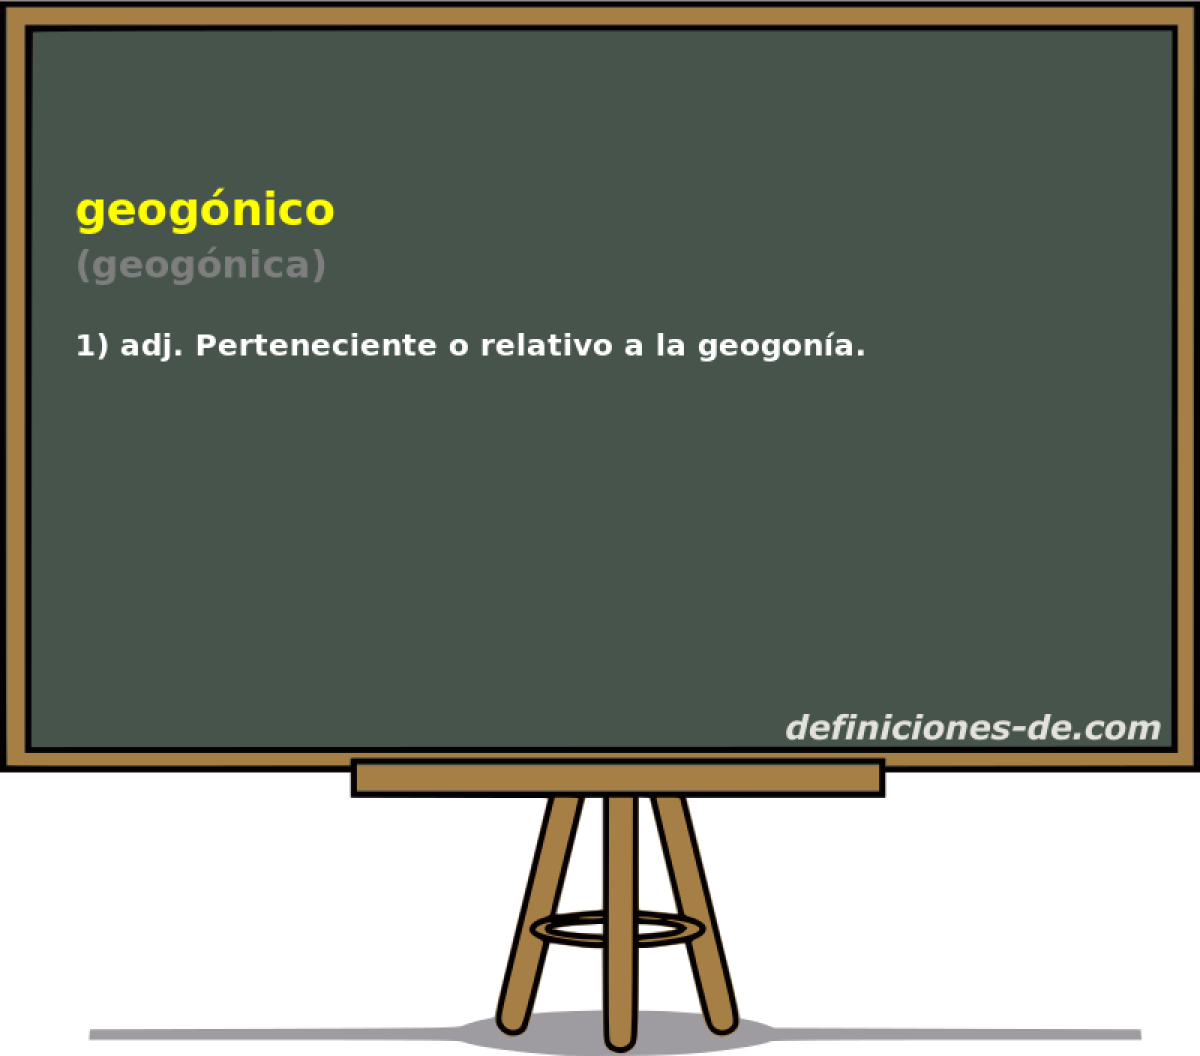 geognico (geognica)